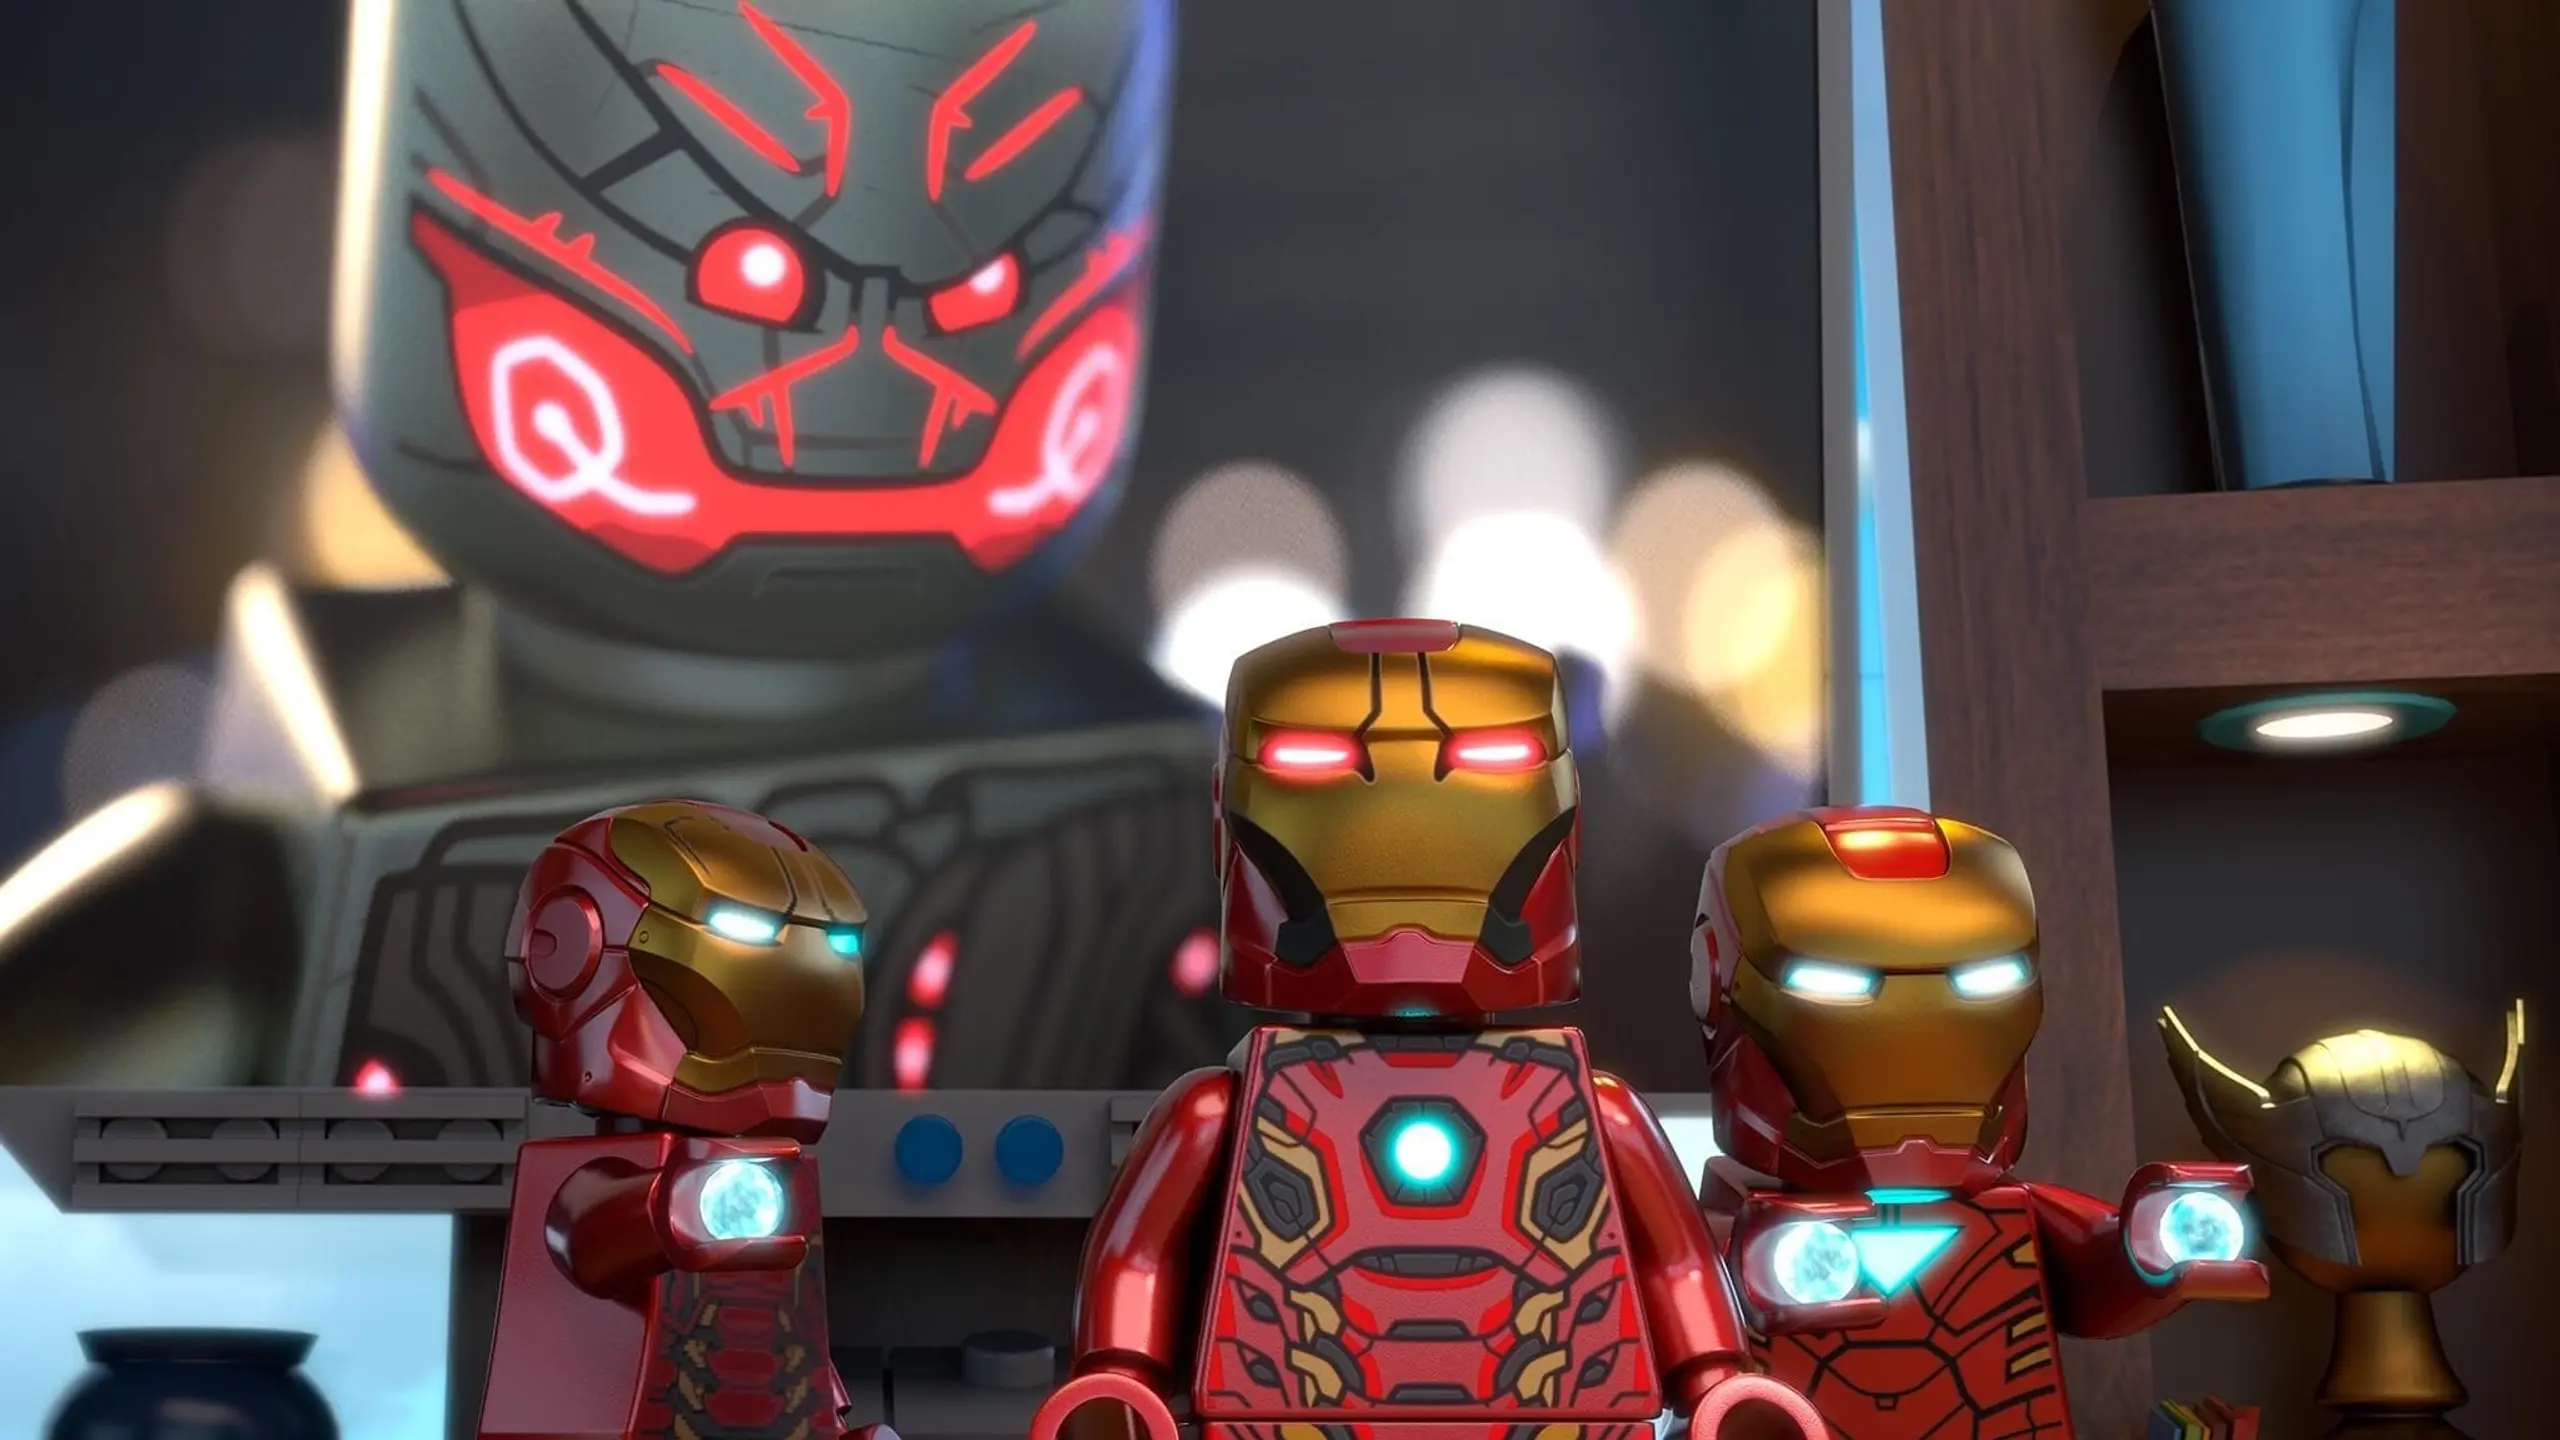 LEGO Marvel Superhelden - Avengers neu montiert!